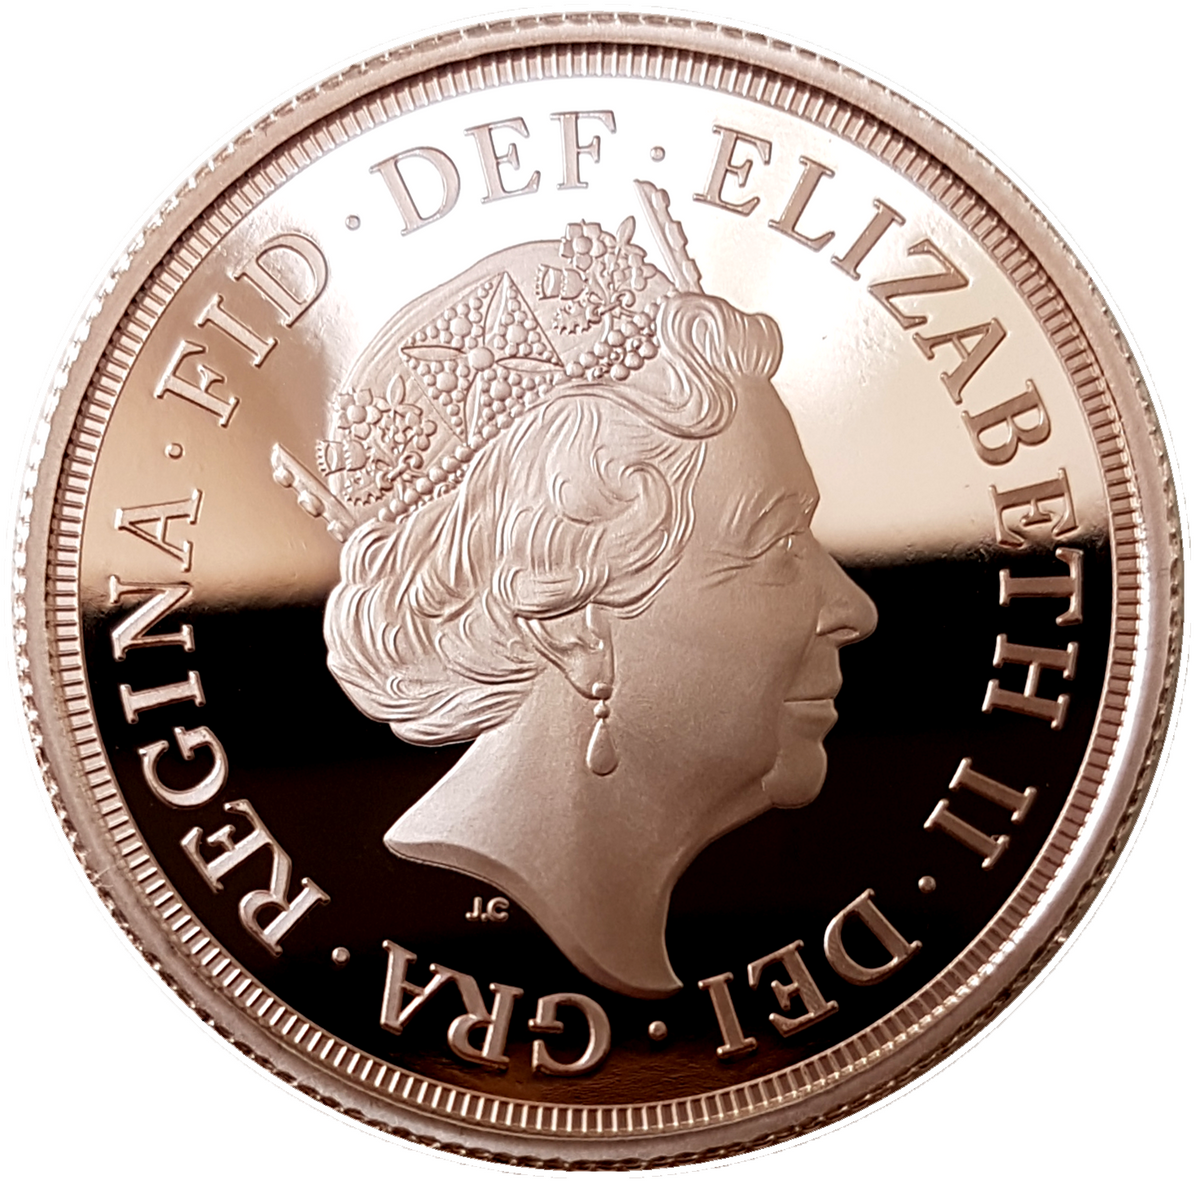 queen elizabeth ii crypto coin